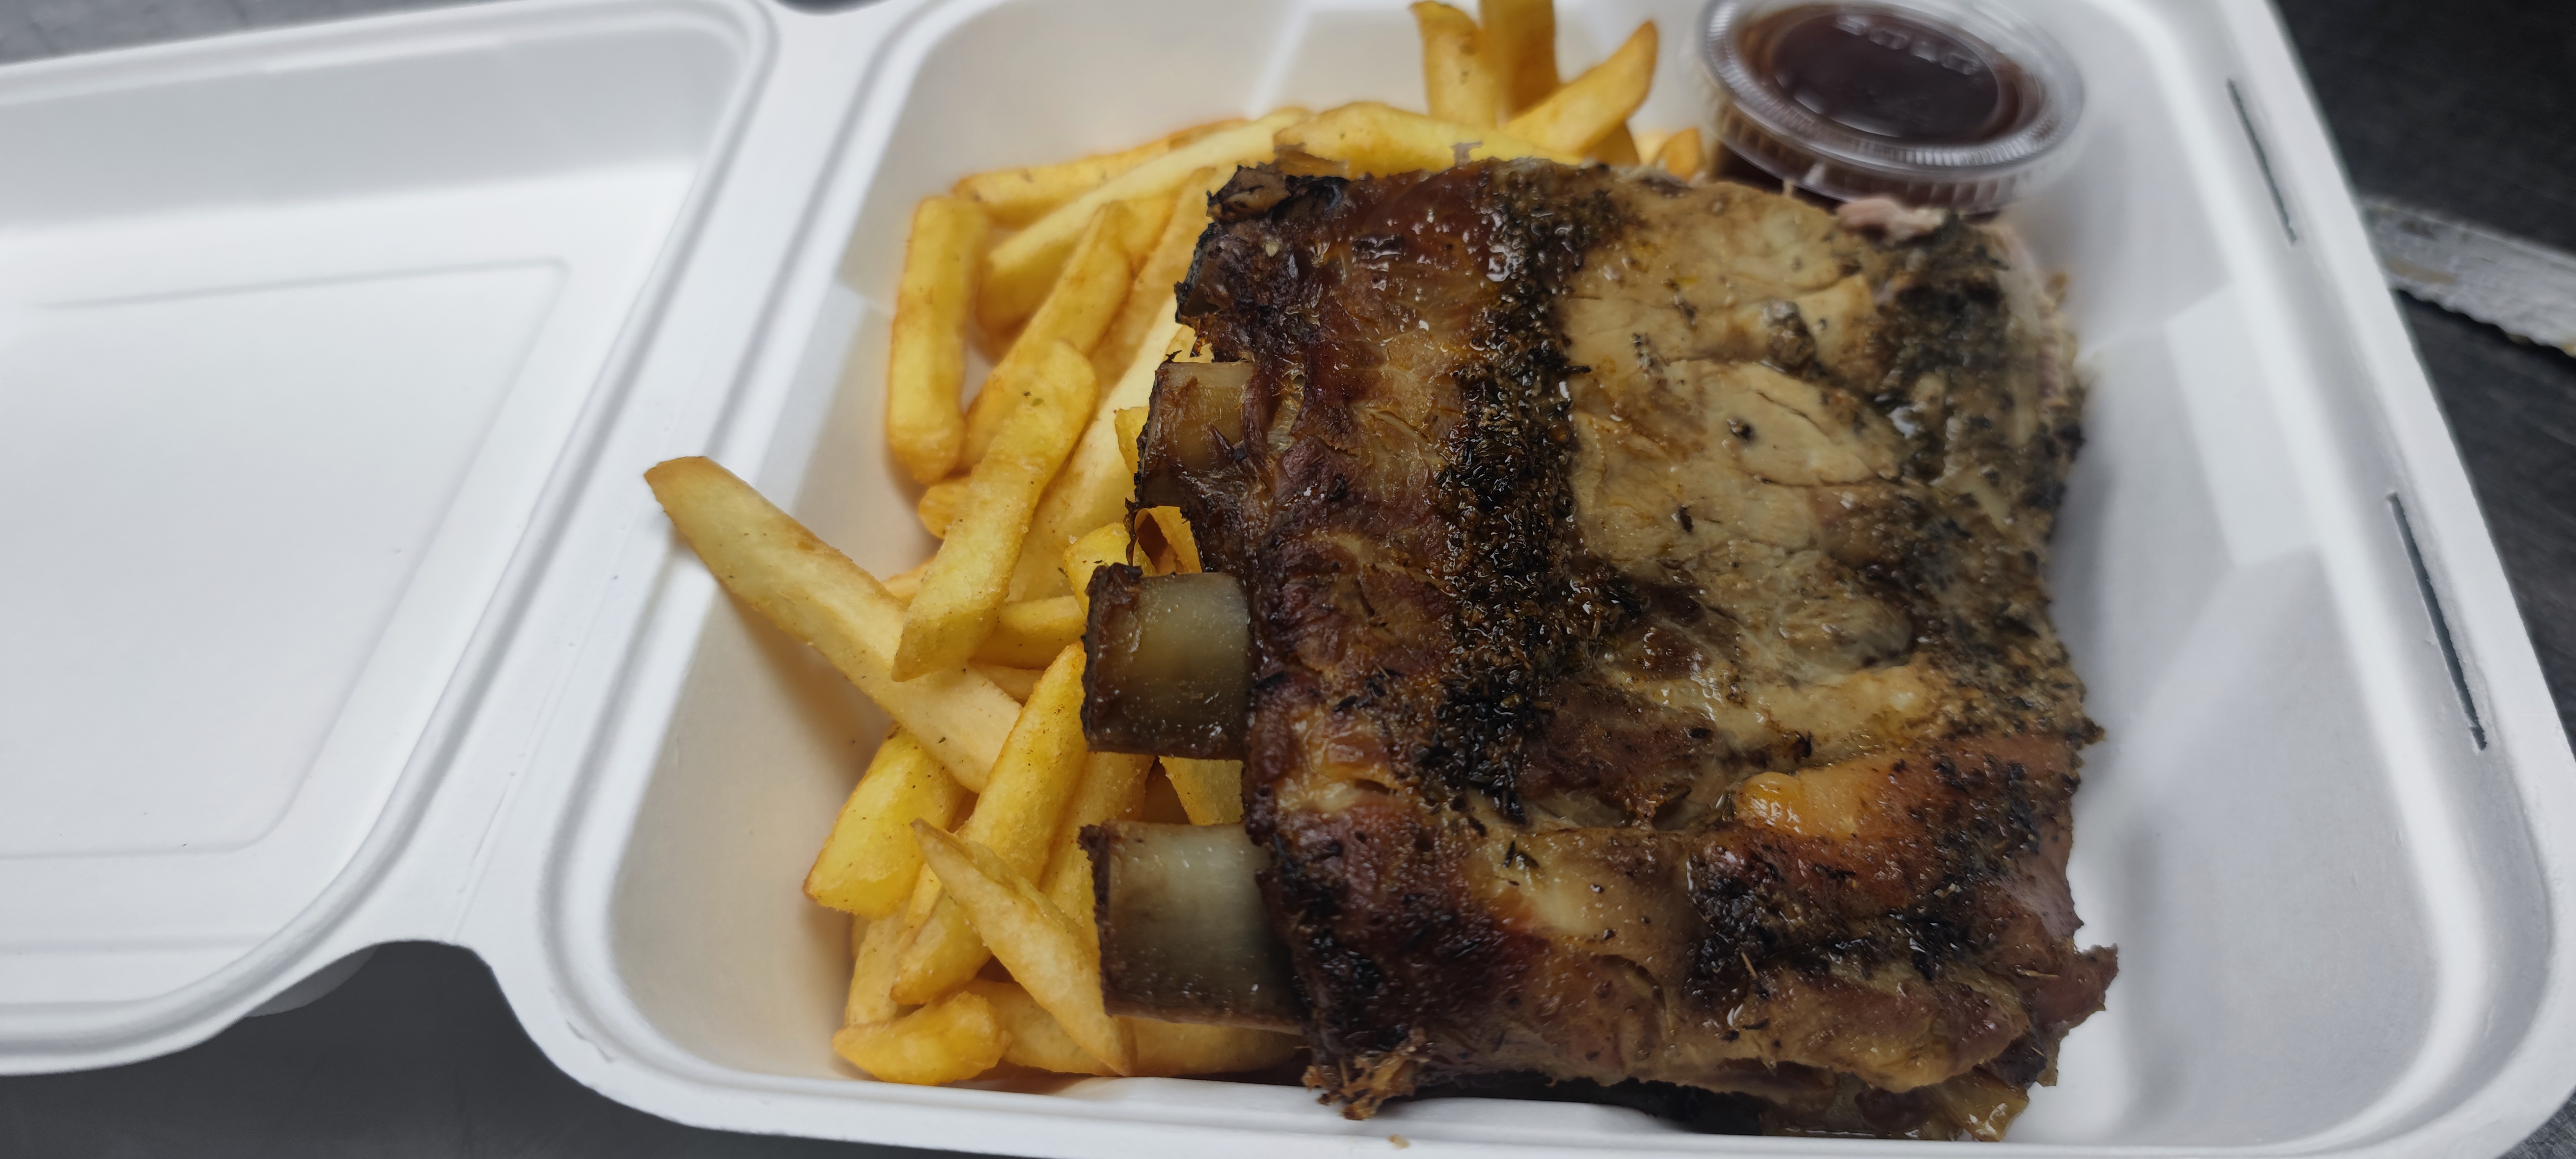 Pork ribs, bbq sauce and fries